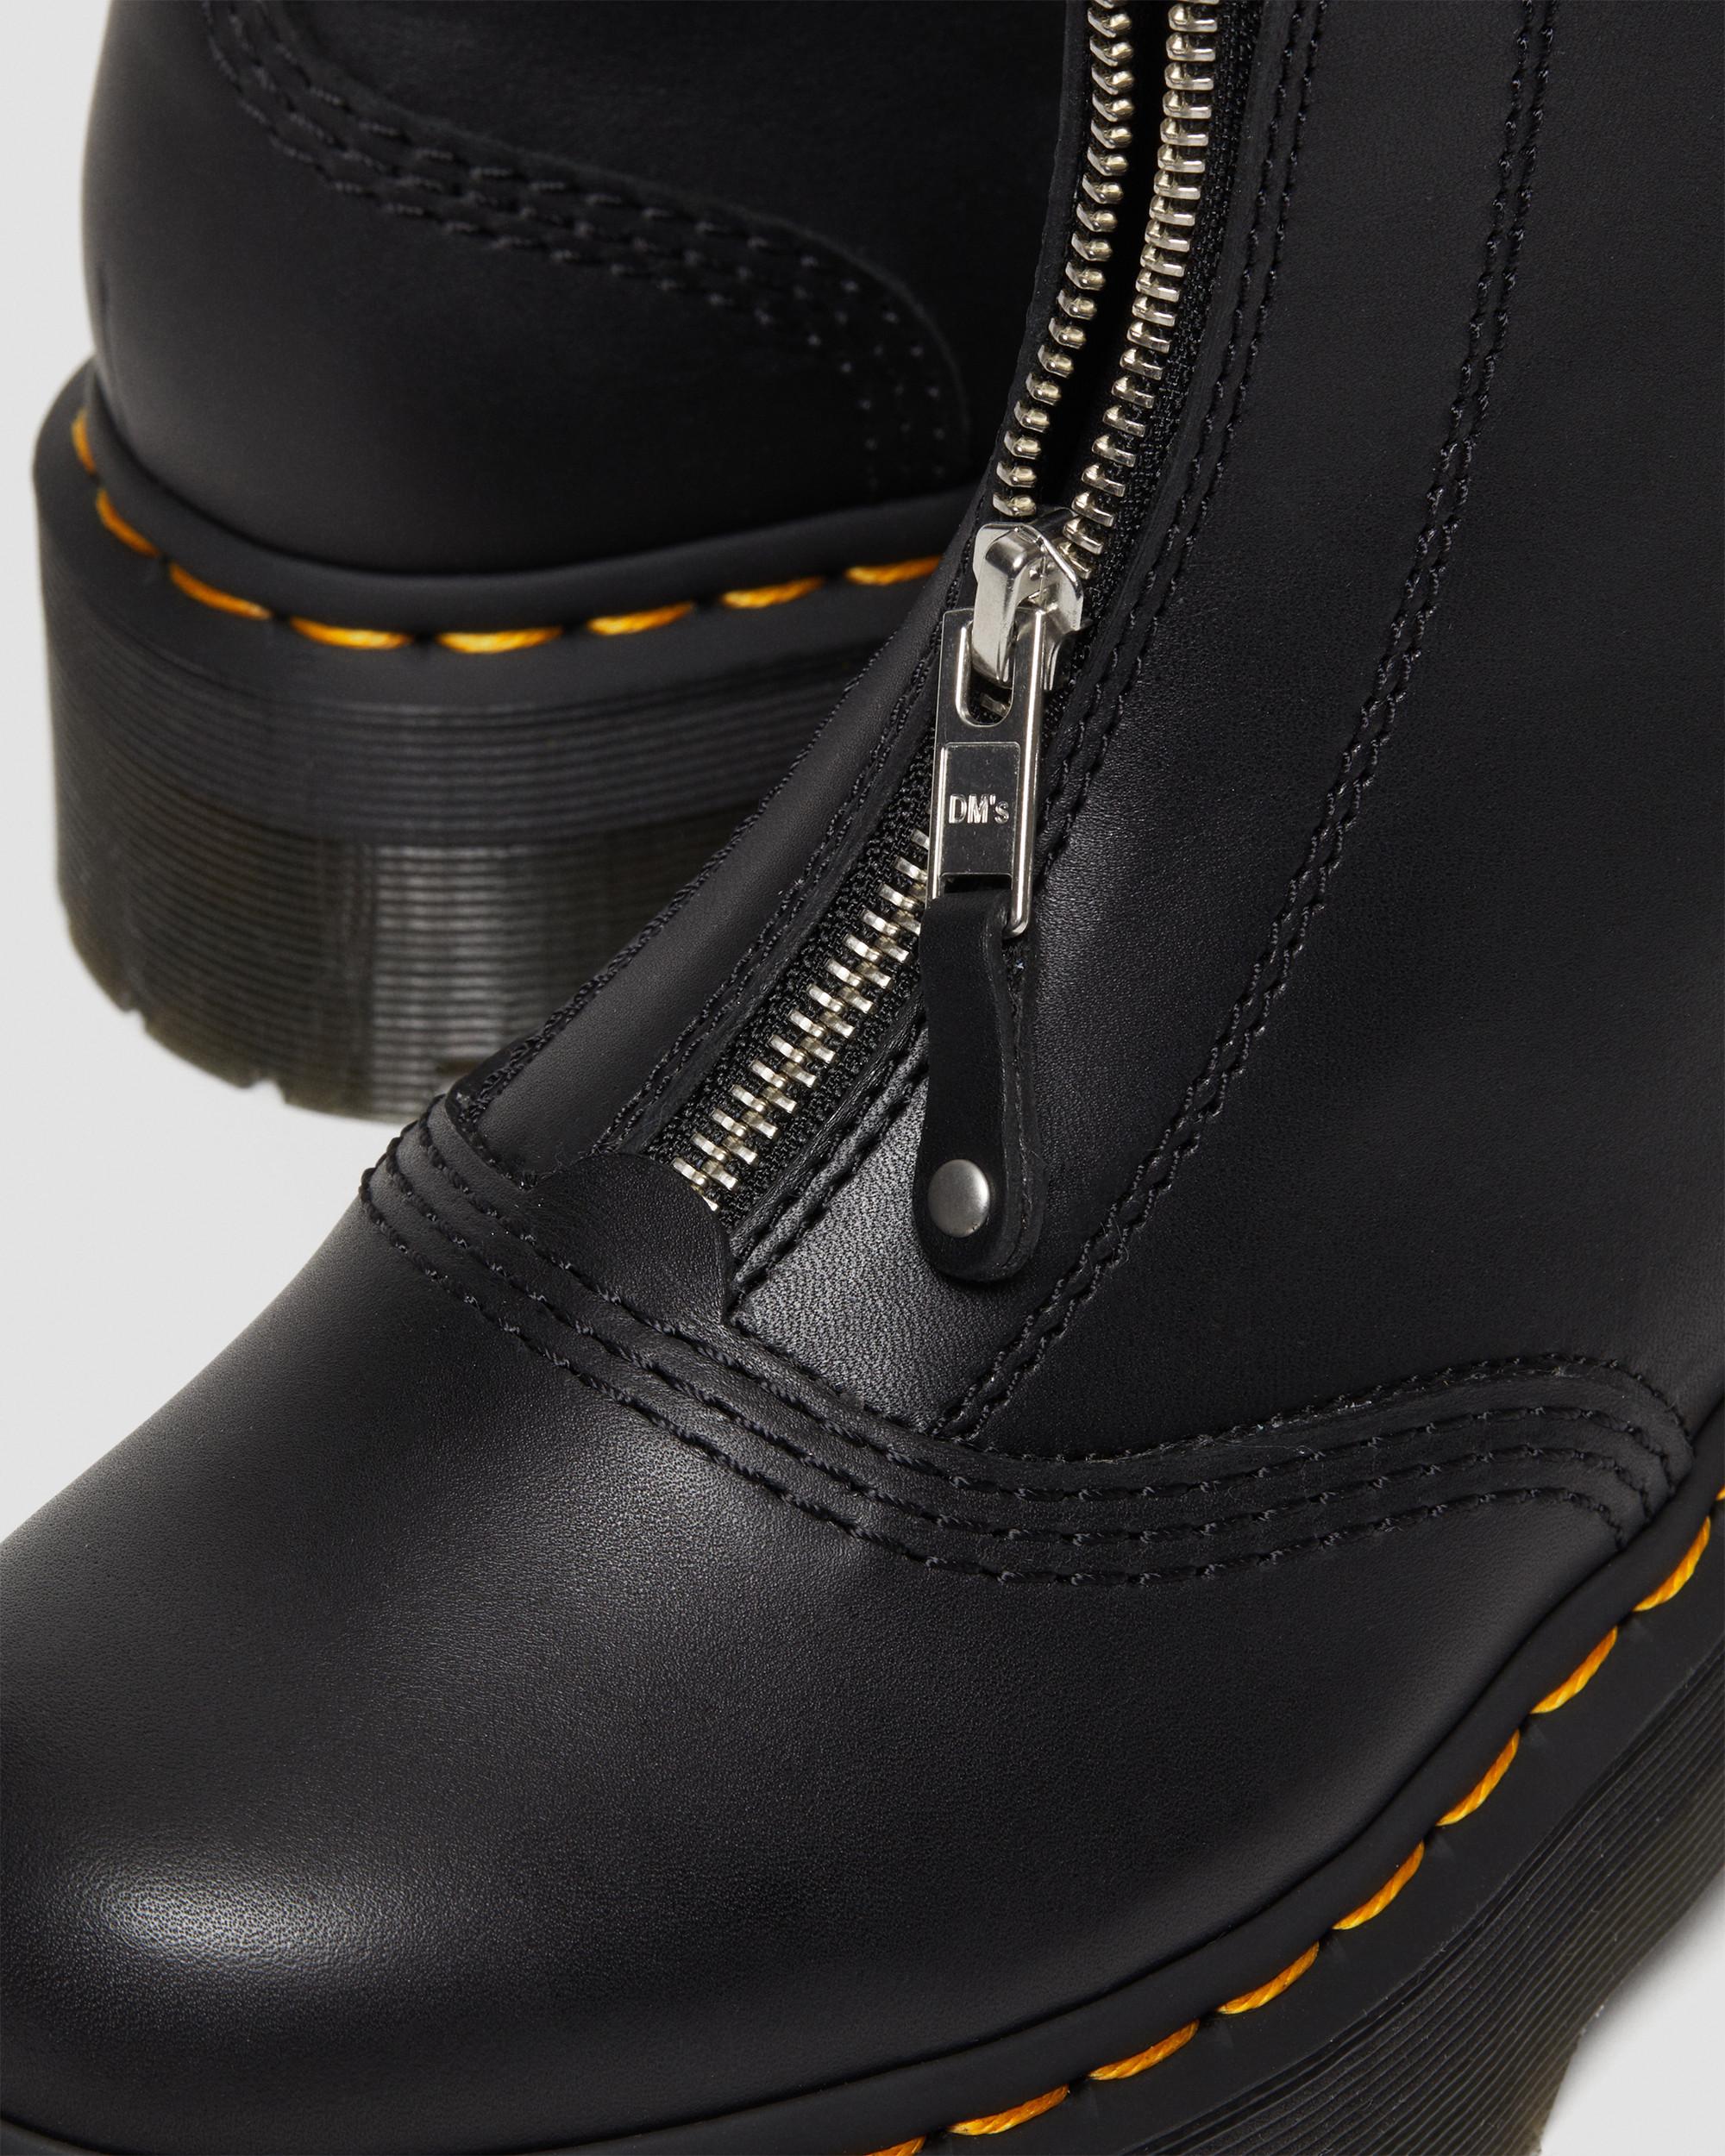 Jetta Zipped Sendal Leather Platform Boots in Black